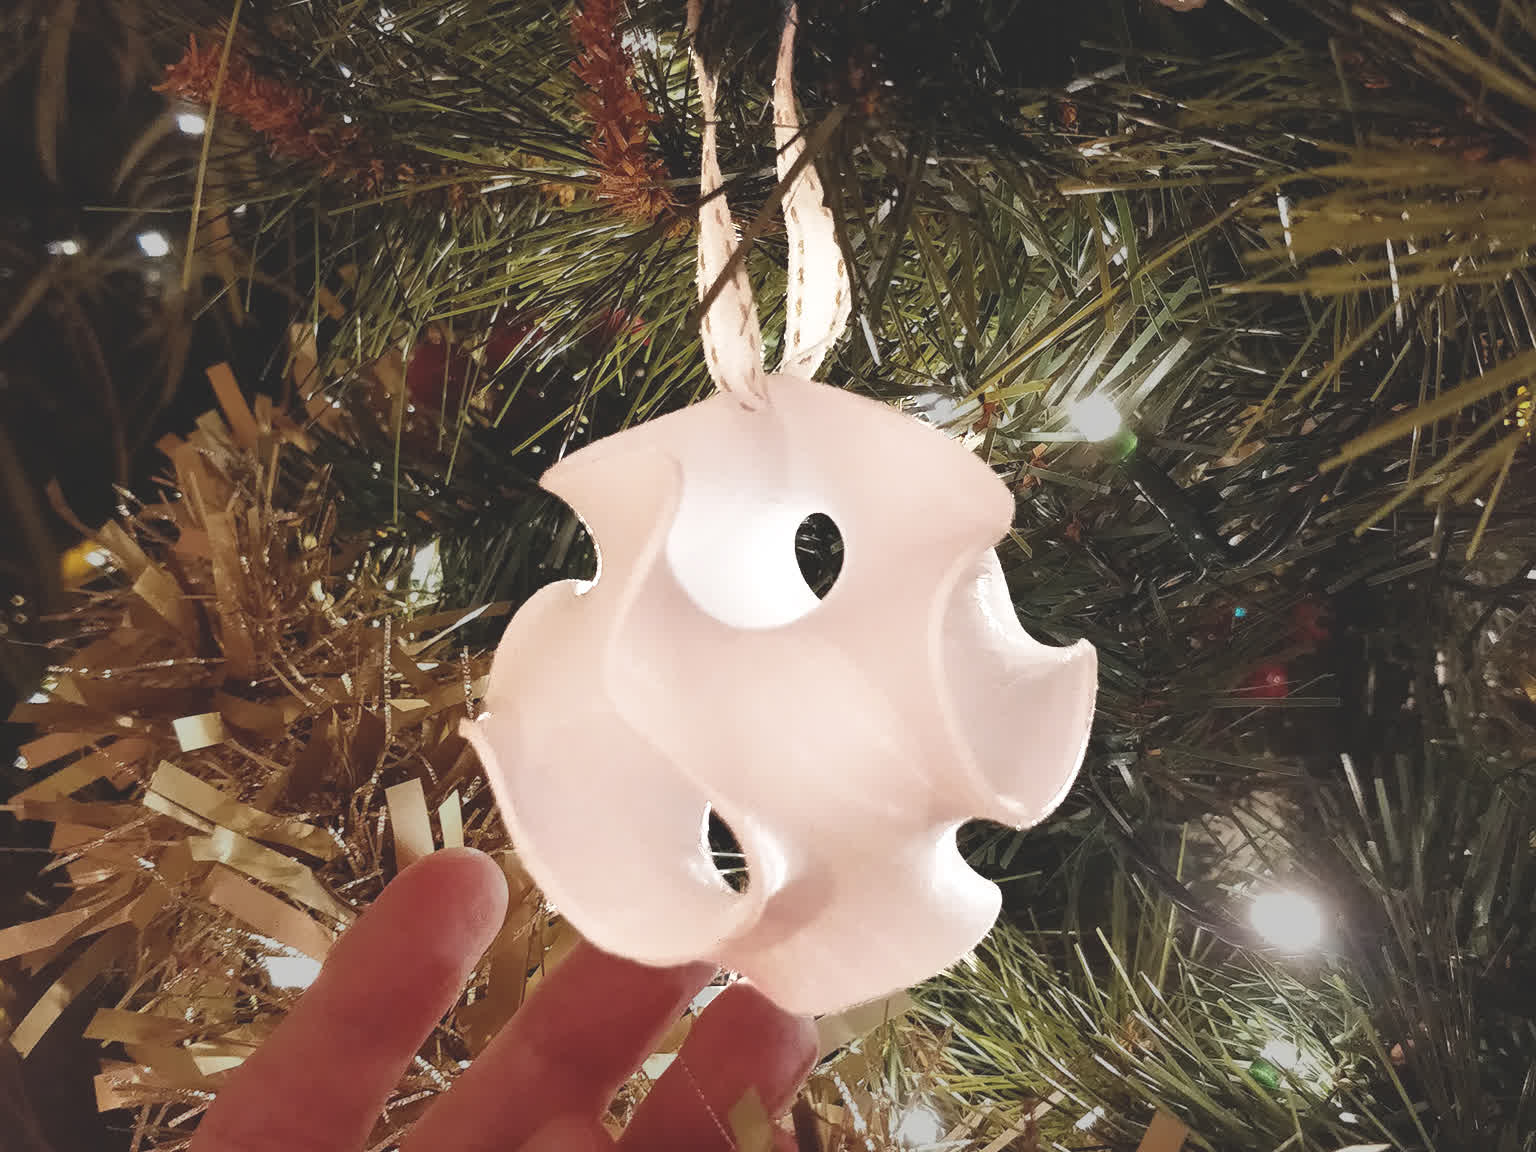 A gyroid christmas ornament on a tree